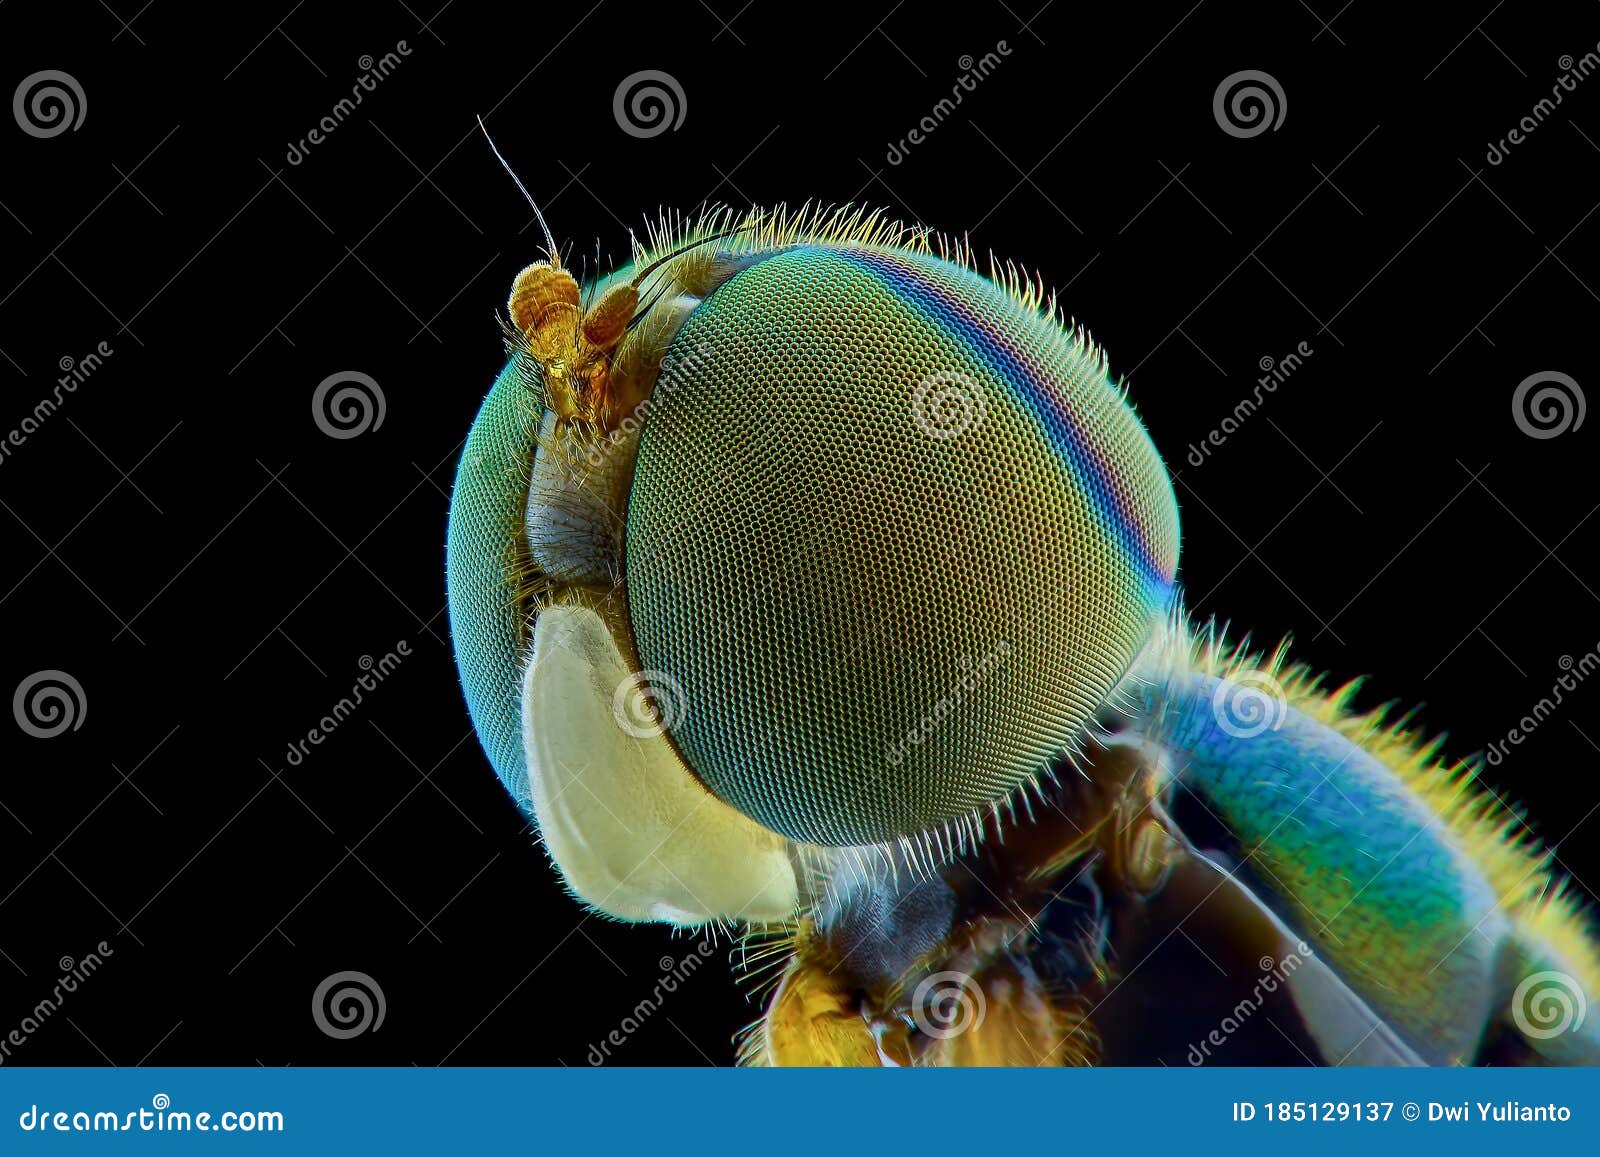 soldierflies extreme closeup macro photograpy